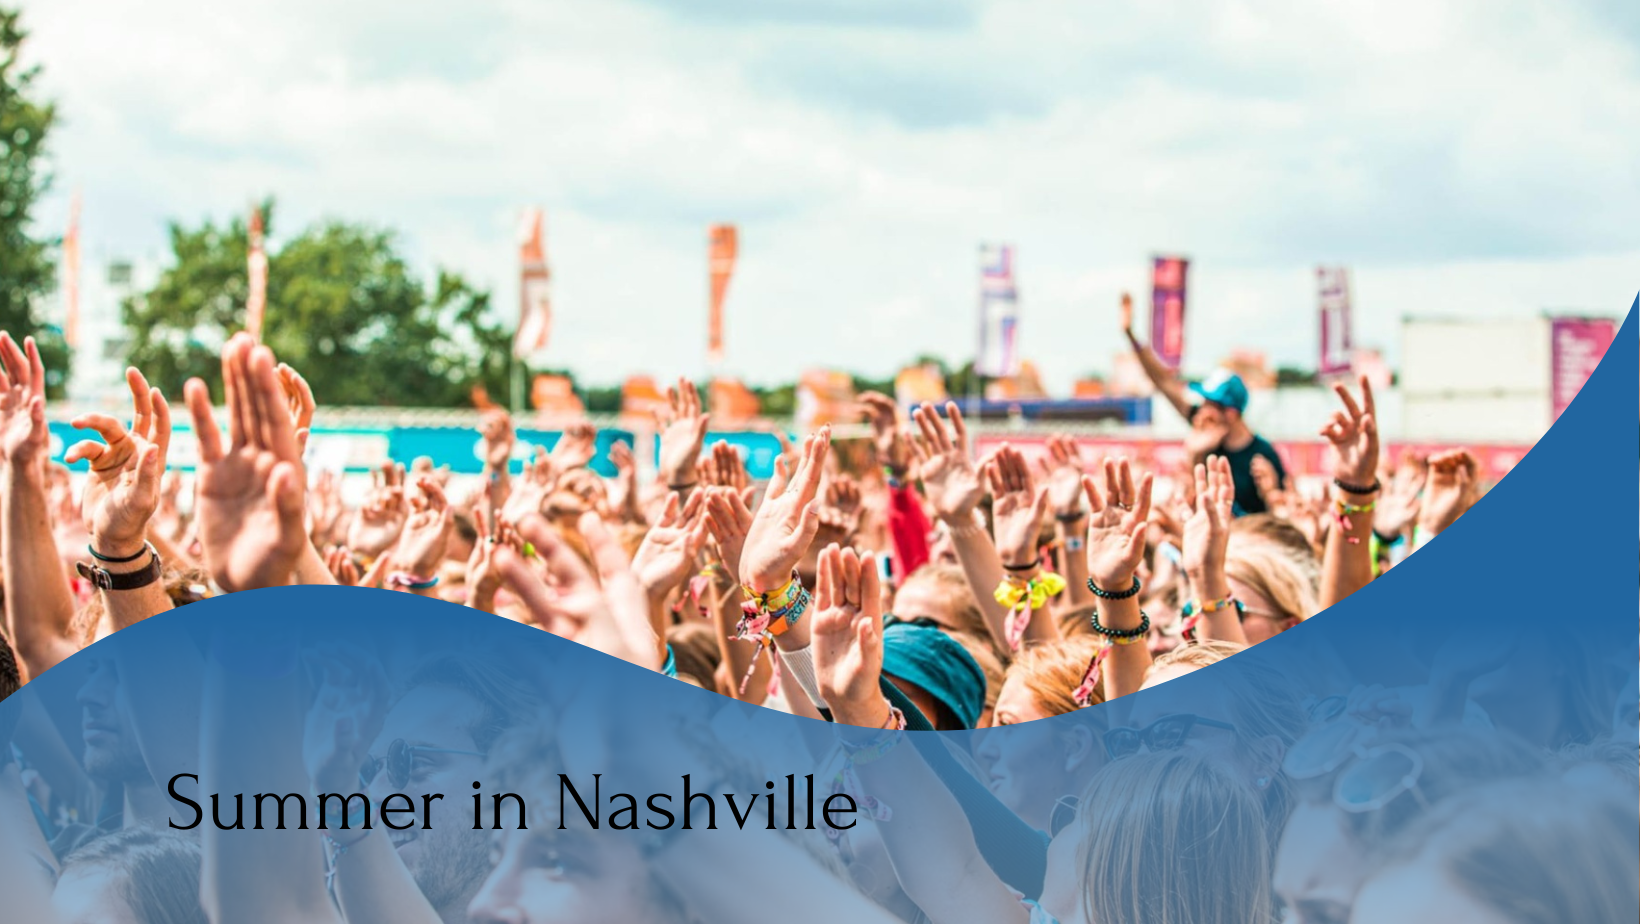 A flock of people raising hands enjoying summer festival and a written text of "Summer in Nashville".